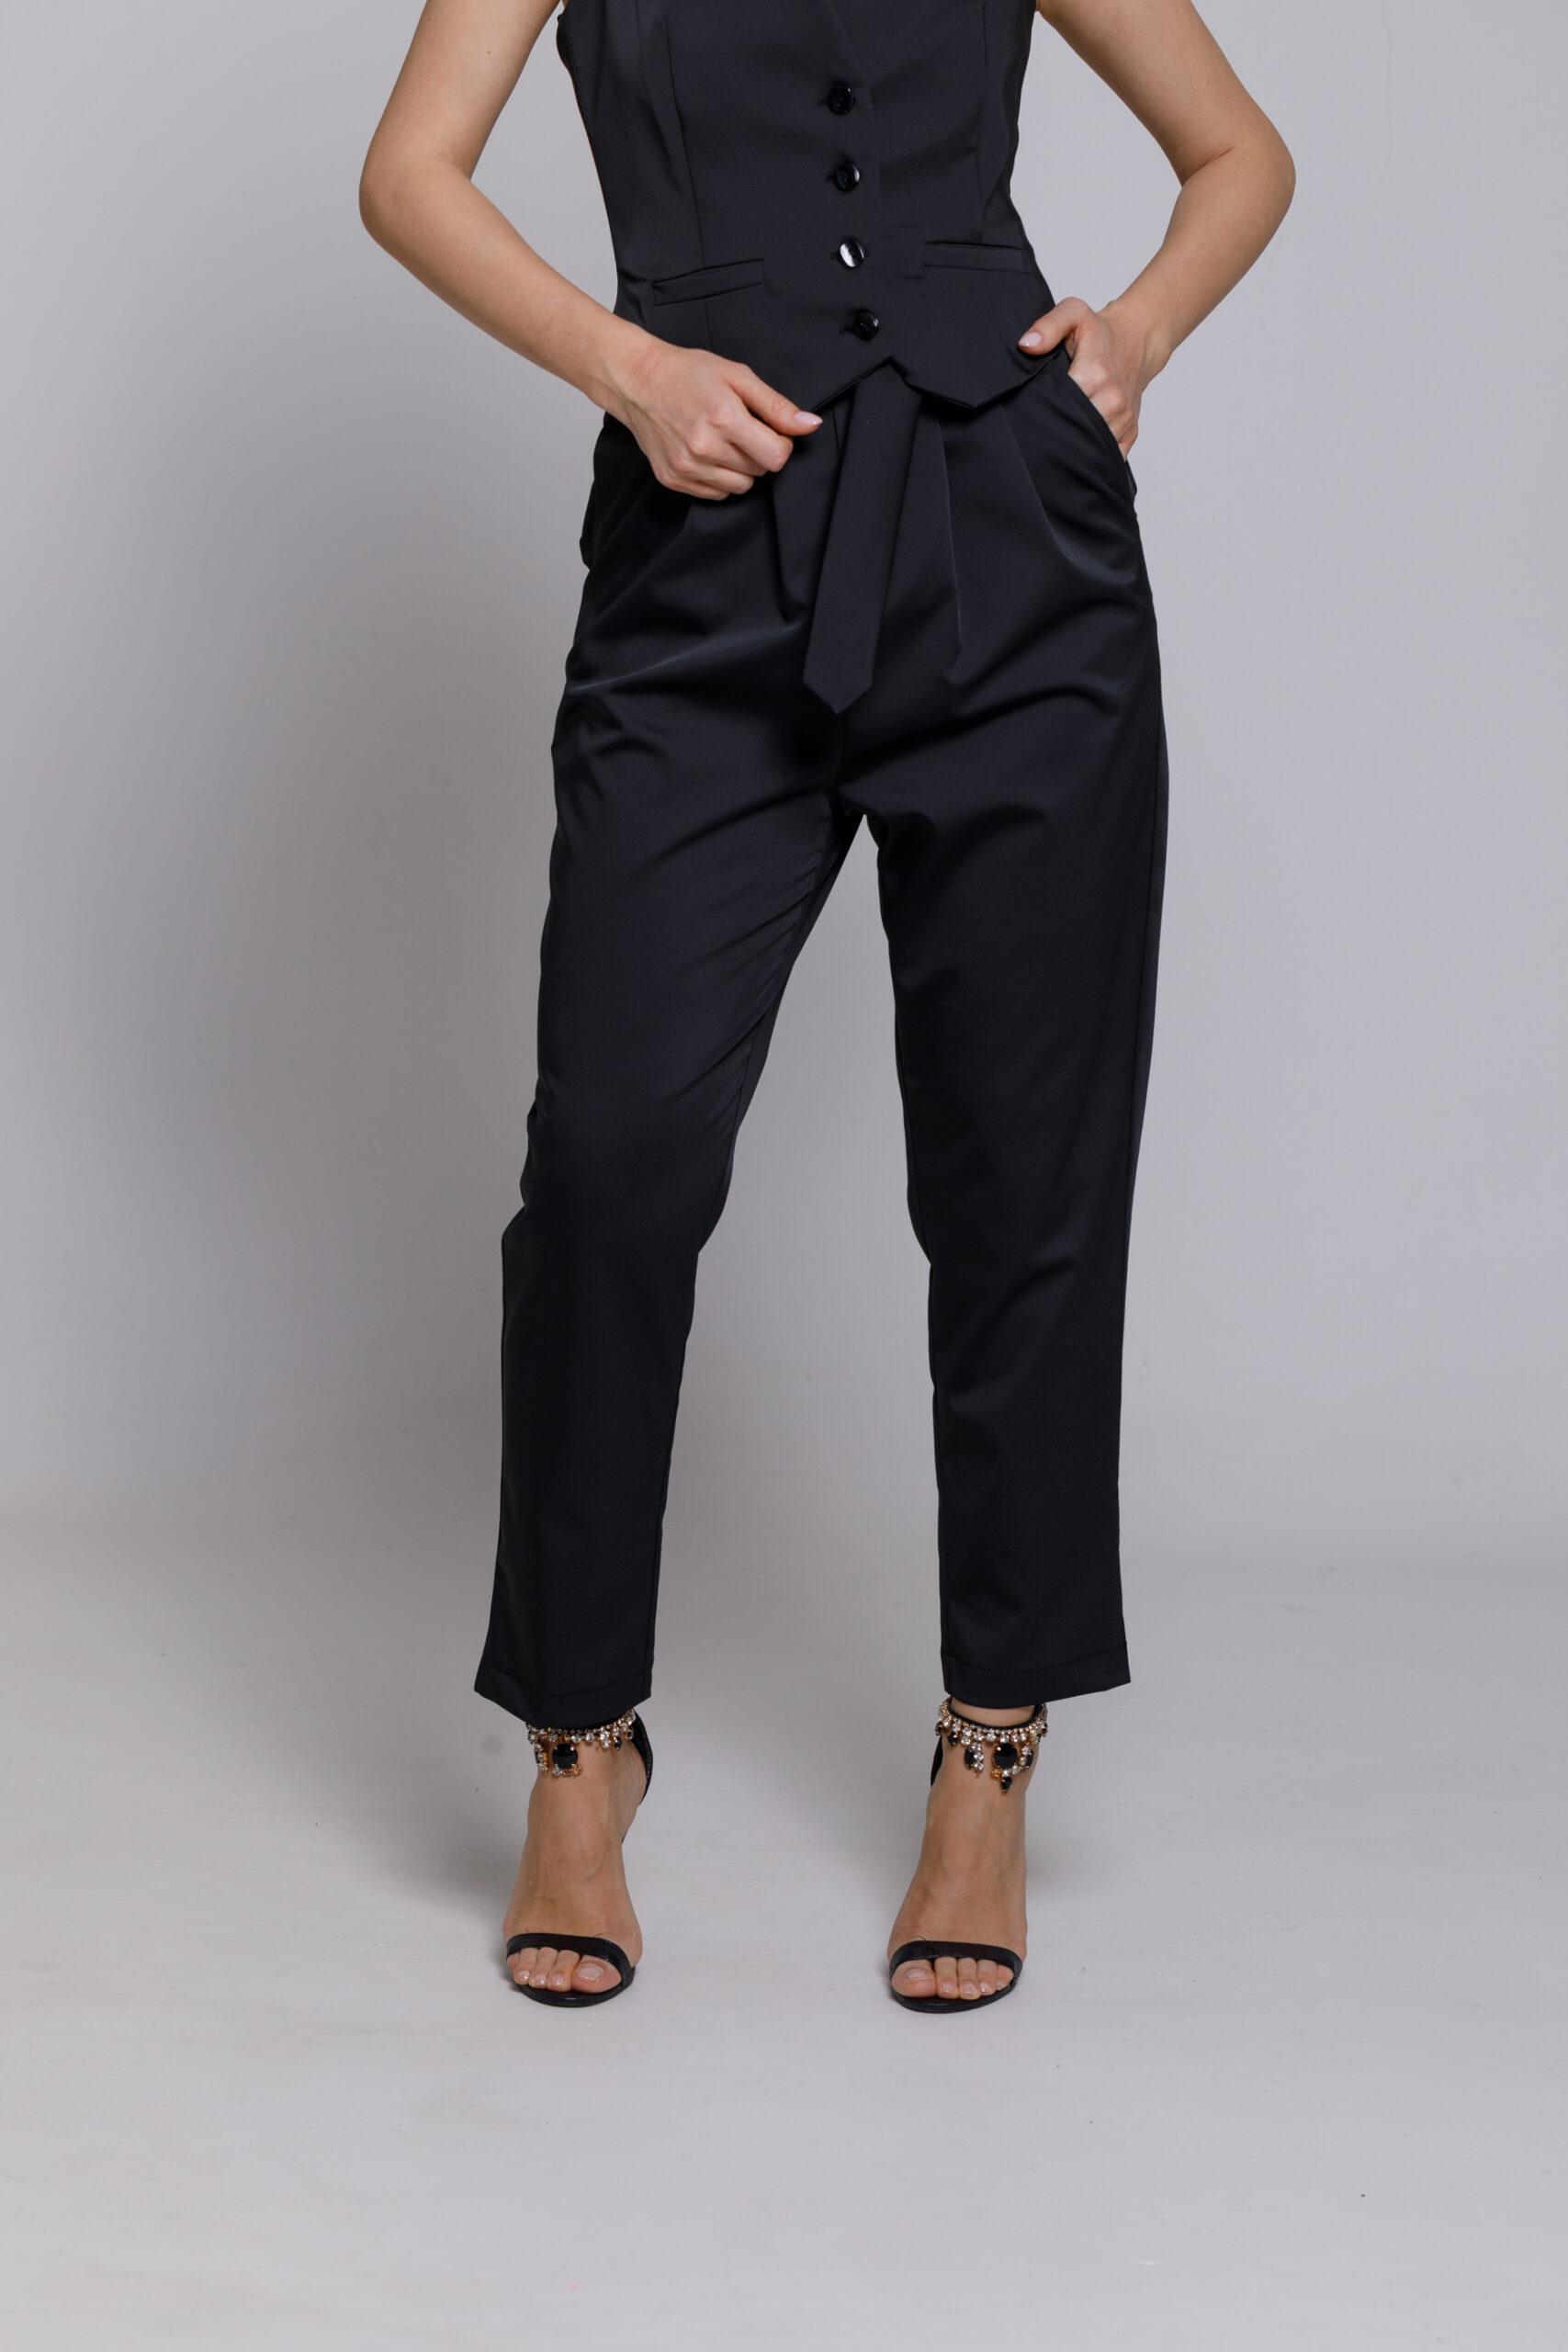 Pantalon CARMEN negru cu curea. Materiale naturale, design unicat, cu broderie si aplicatii handmade